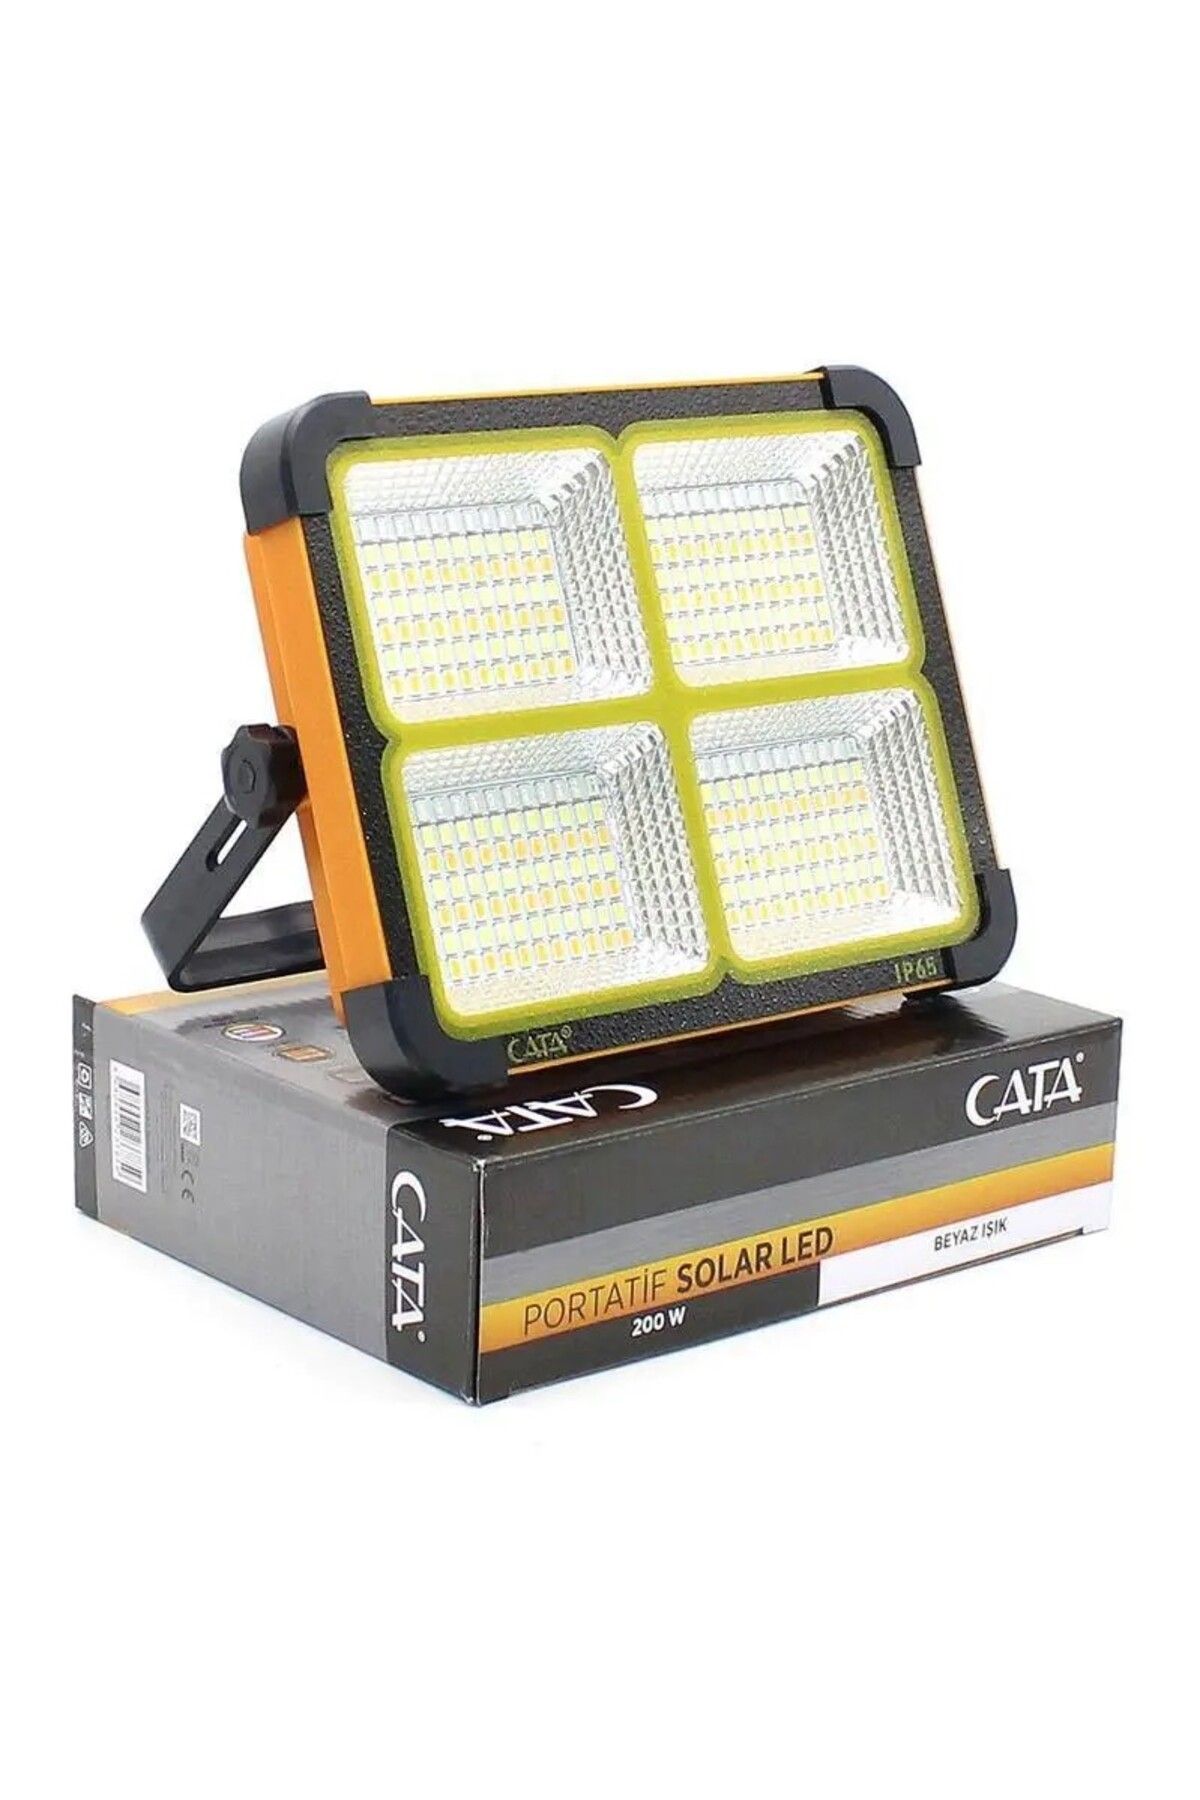 Cata Solar Led 200w Portatif Projektör - Powerbank Özellikli Ct-4698